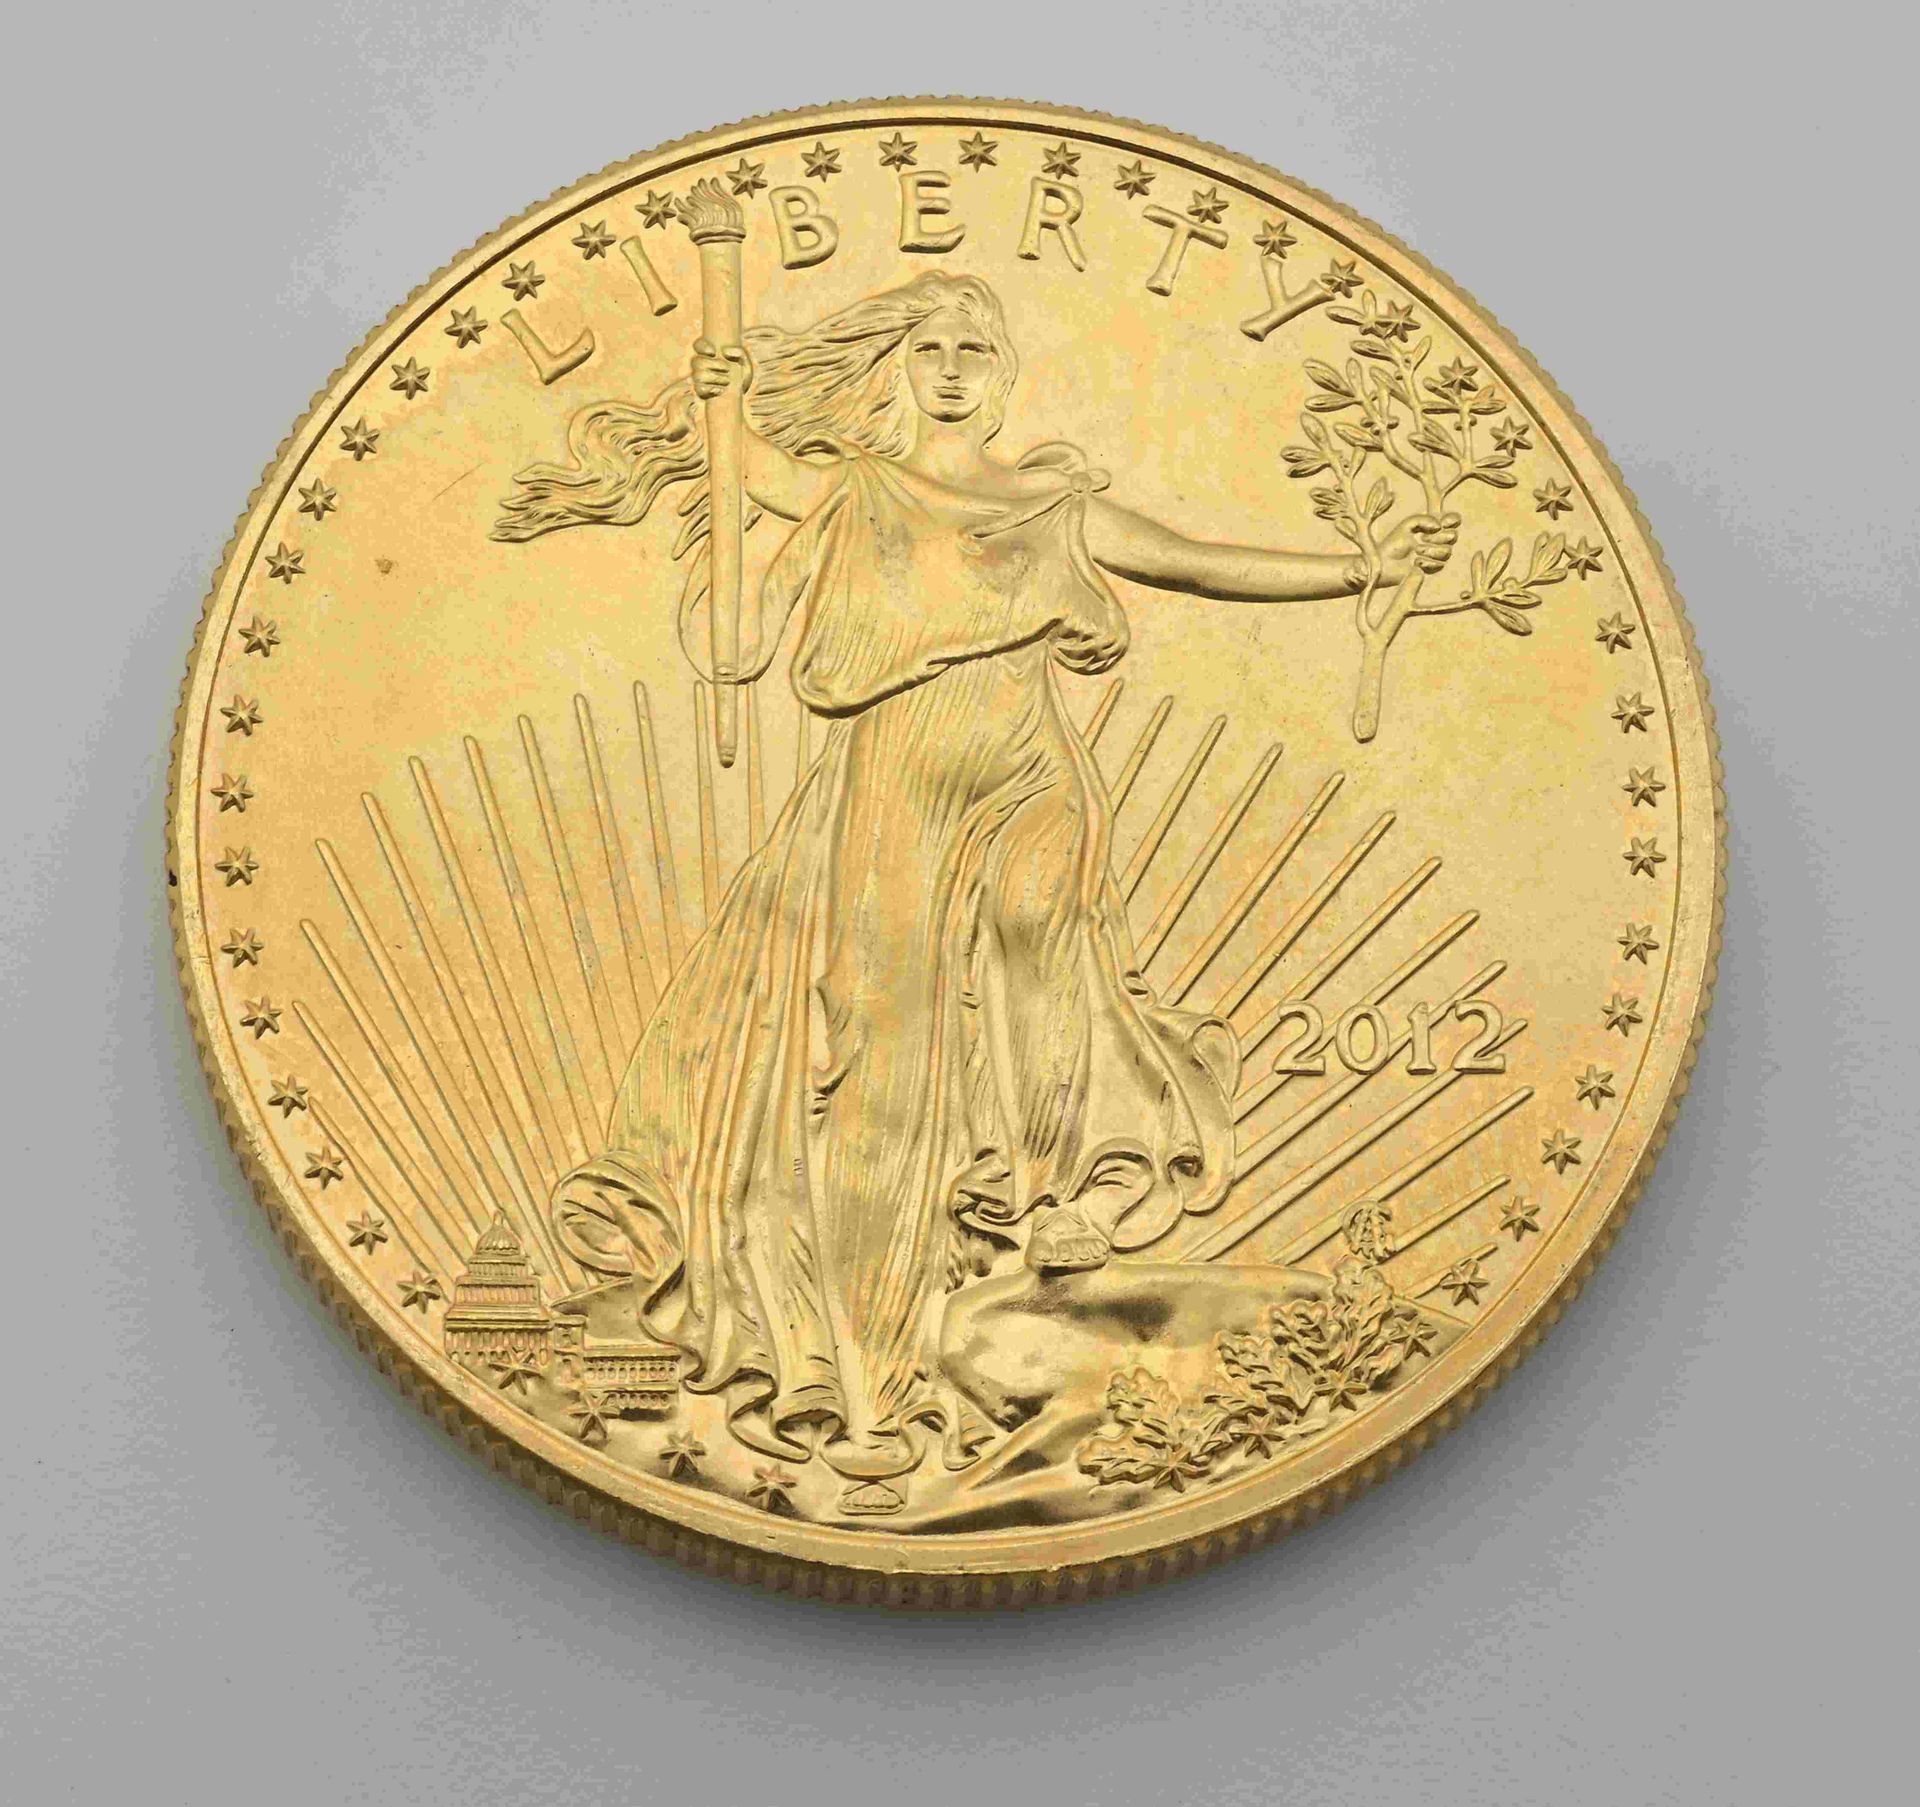 Null Moneta da 50 dollari USA da un'oncia d'oro fino, St Gaudens 2012.
In astucc&hellip;